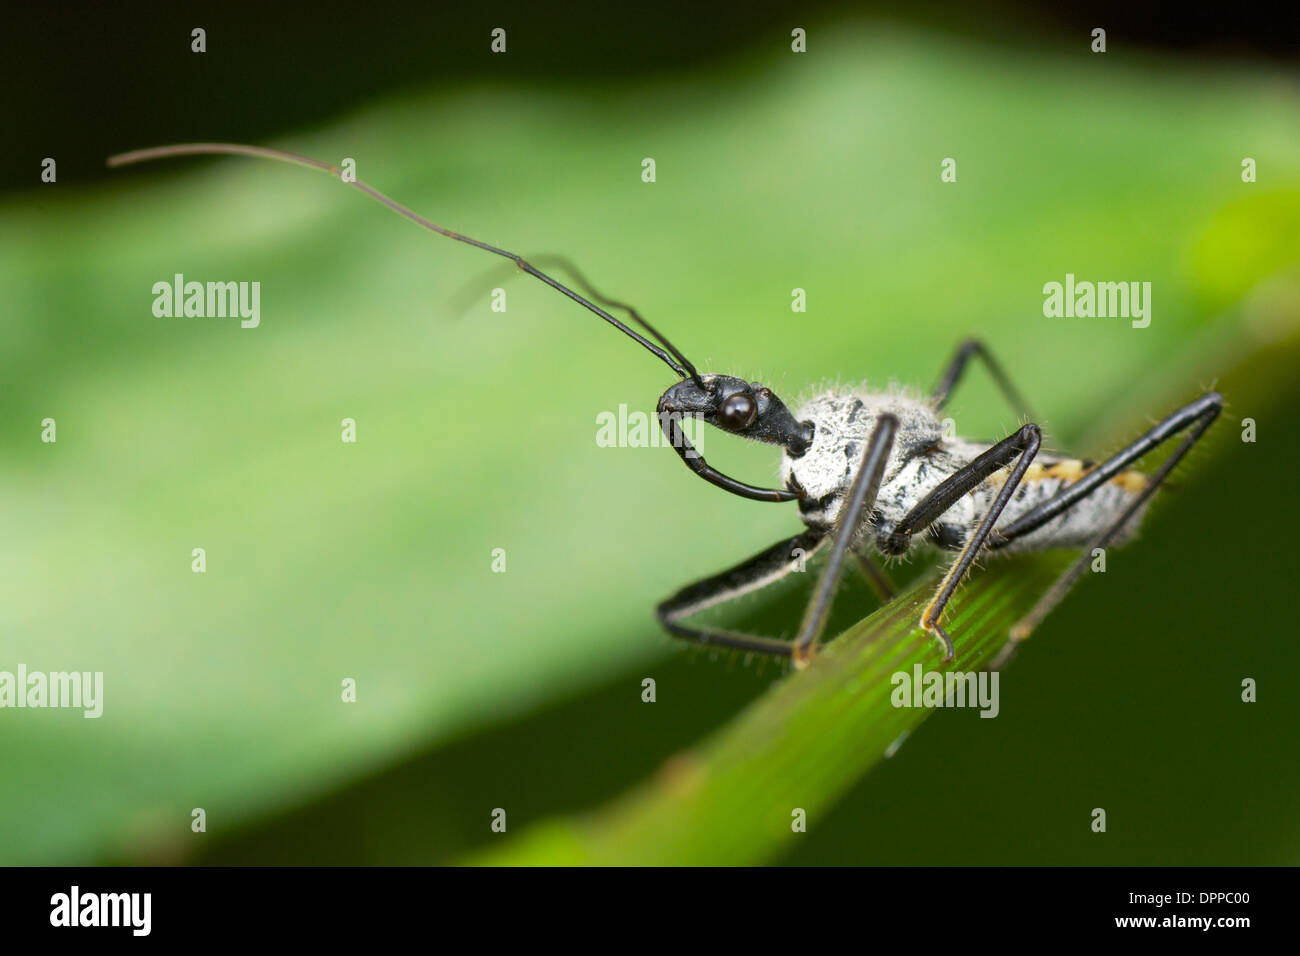 Reduviidae assassin bug. Banque D'Images